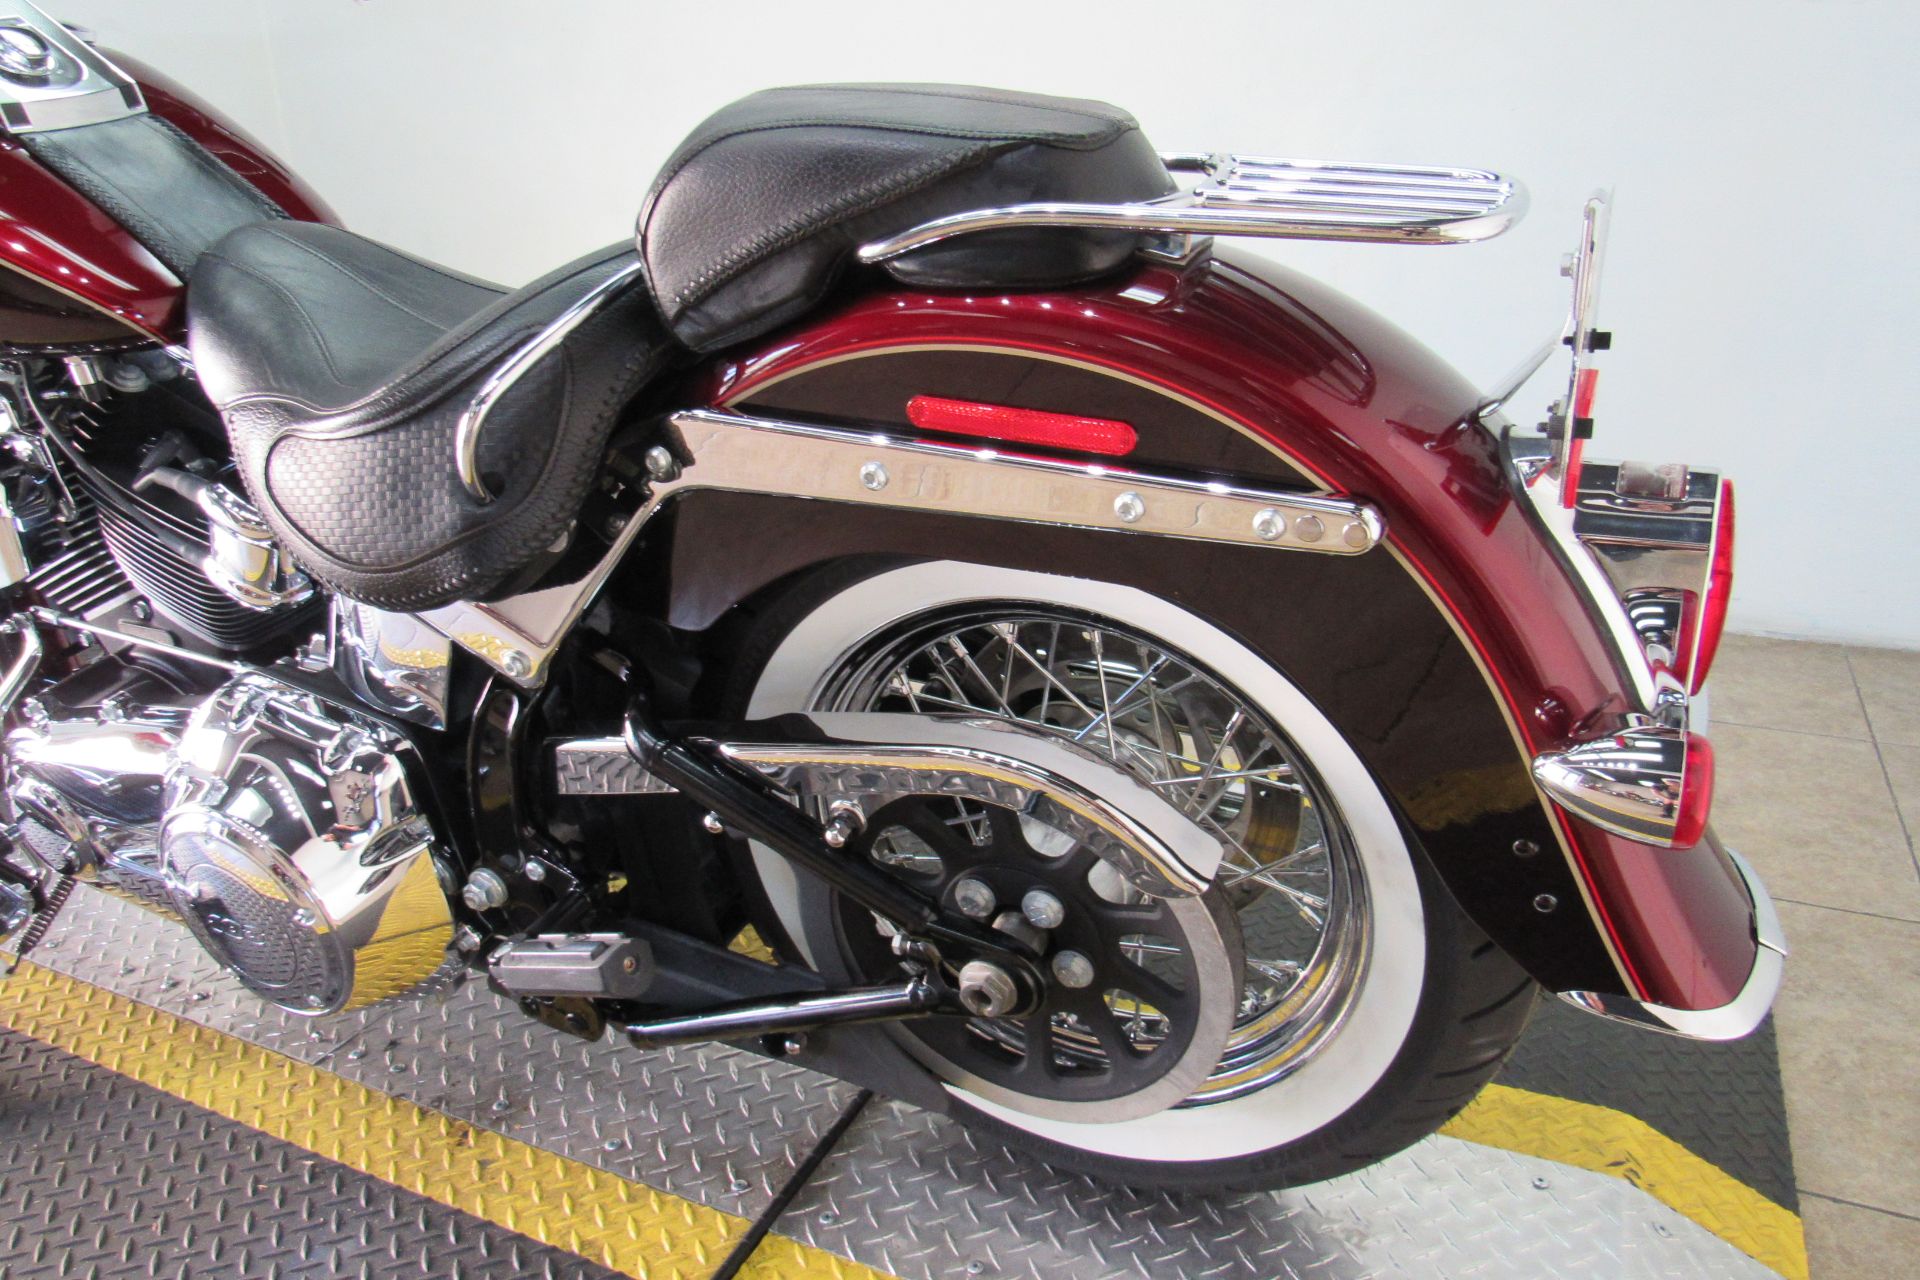 2014 Harley-Davidson Softail® Deluxe in Temecula, California - Photo 32